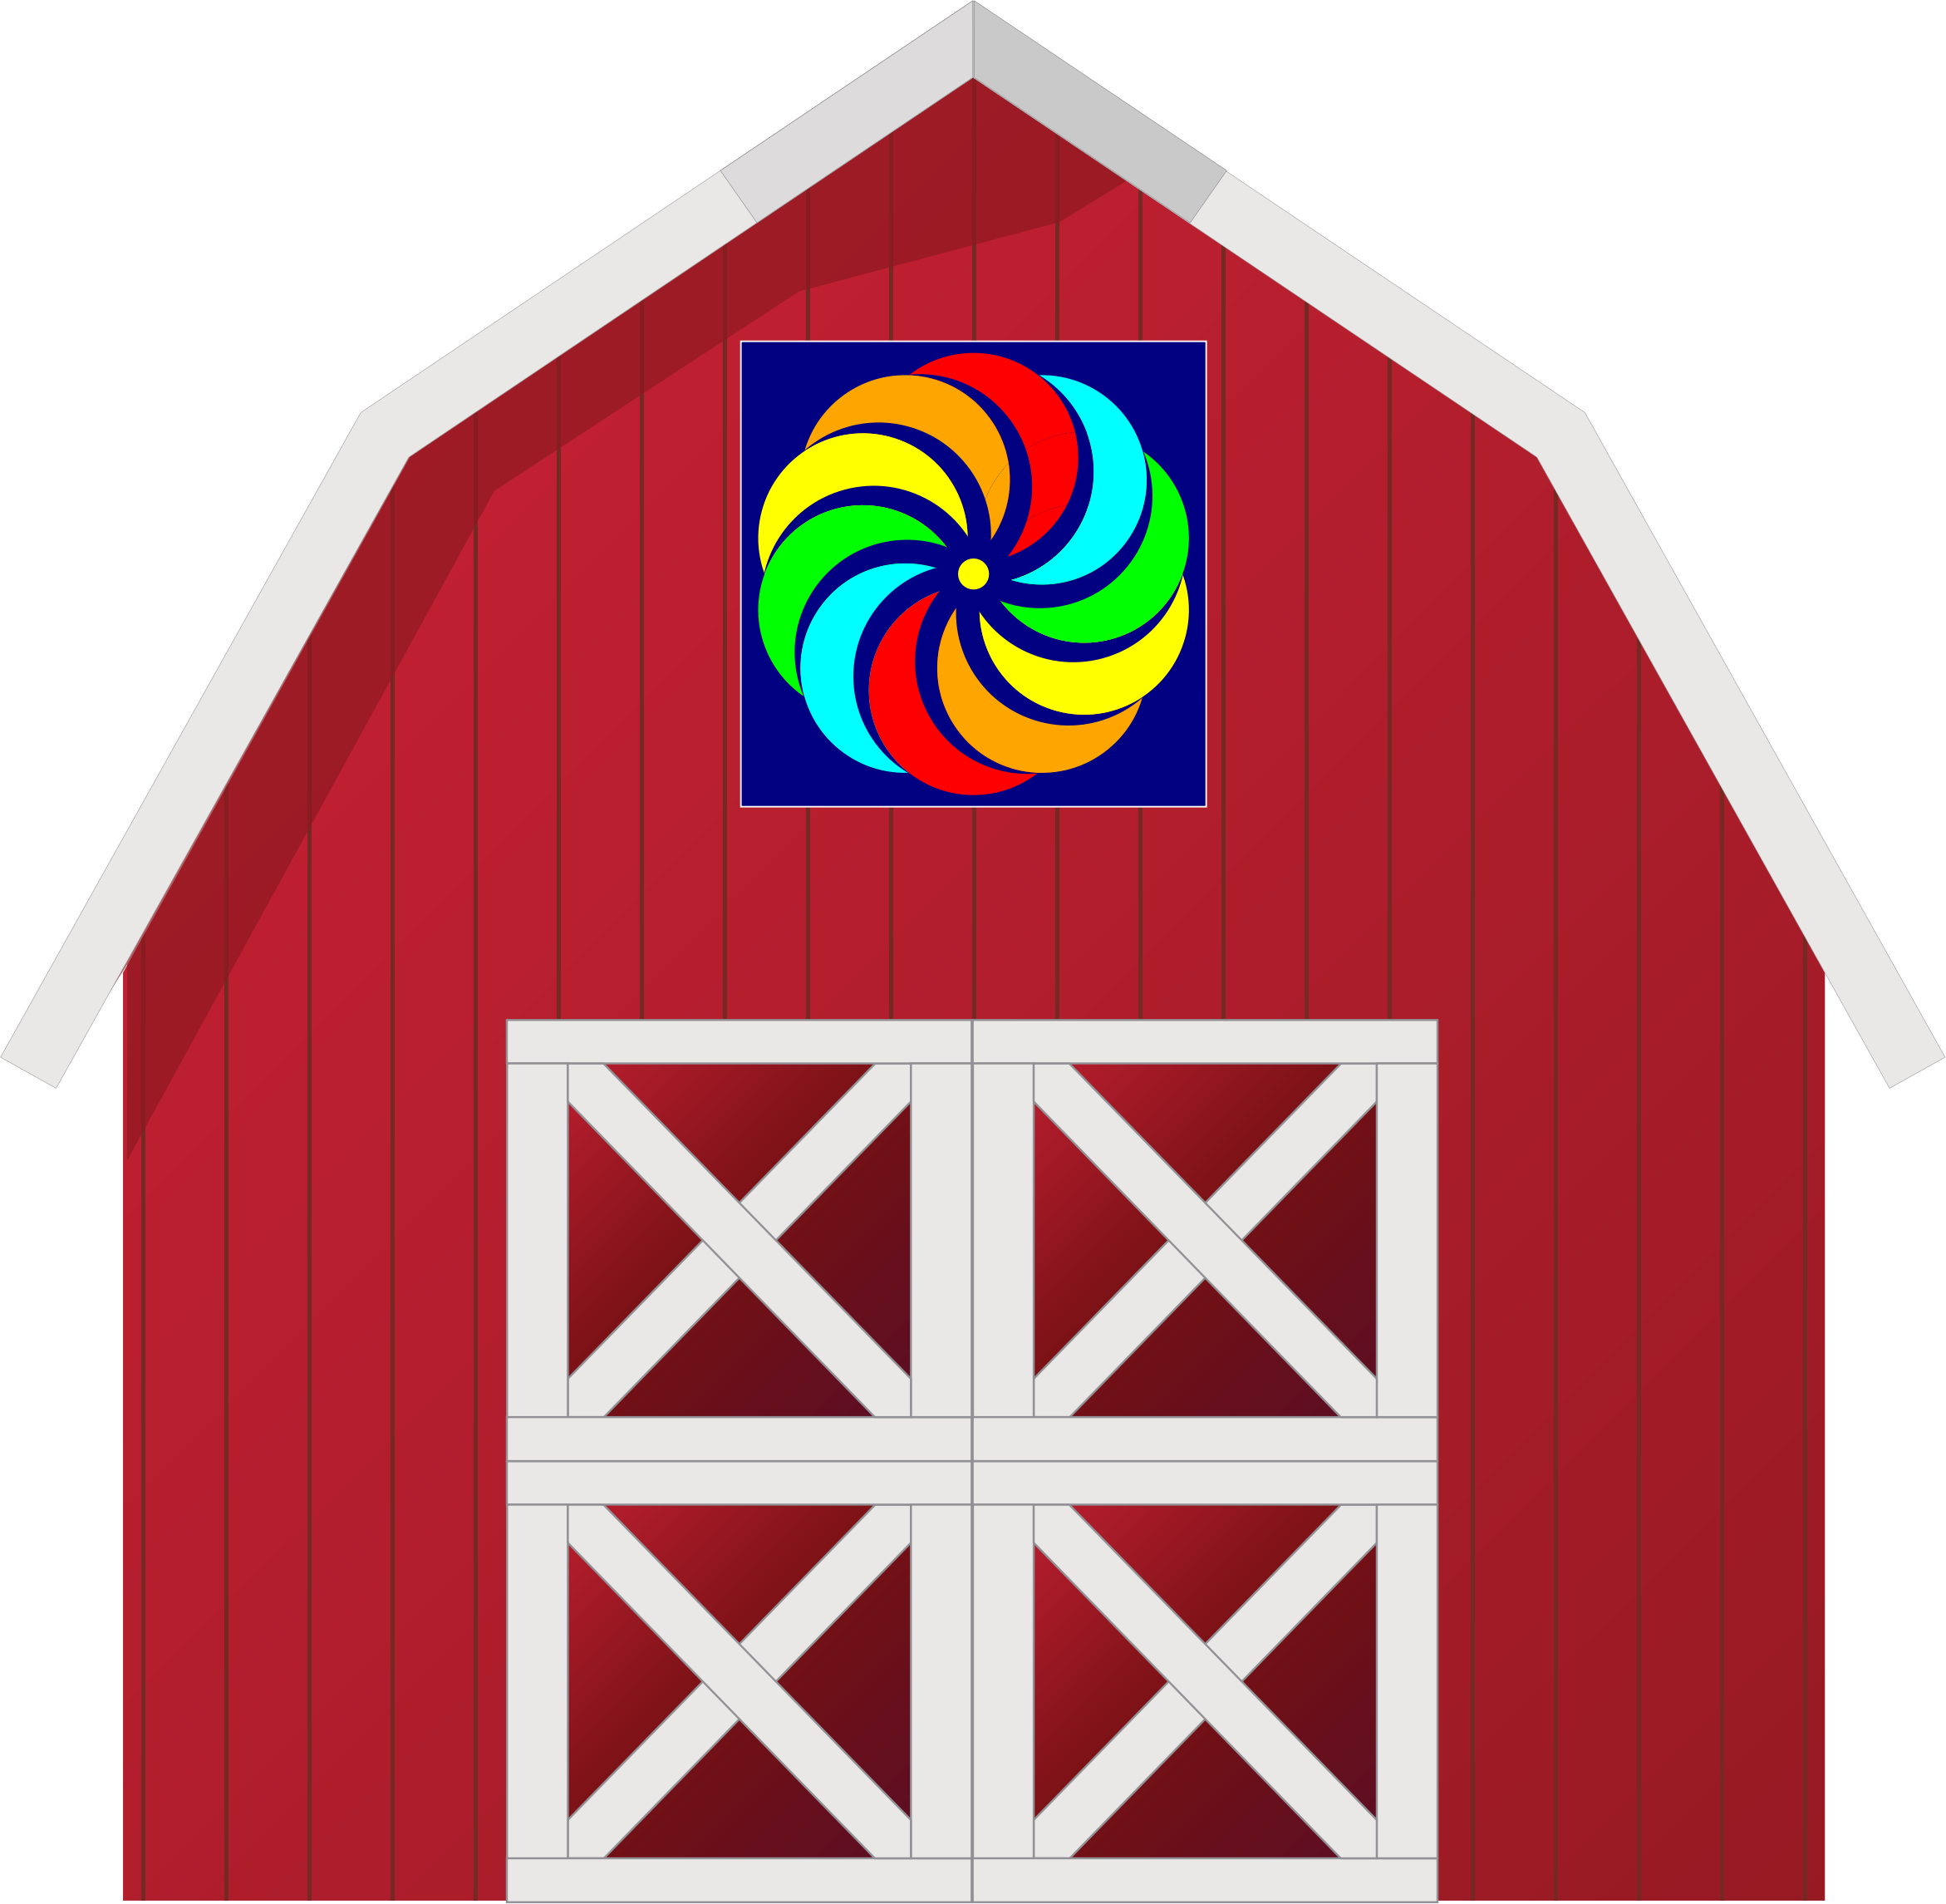 Big Image - Red Barn (2342x2291)